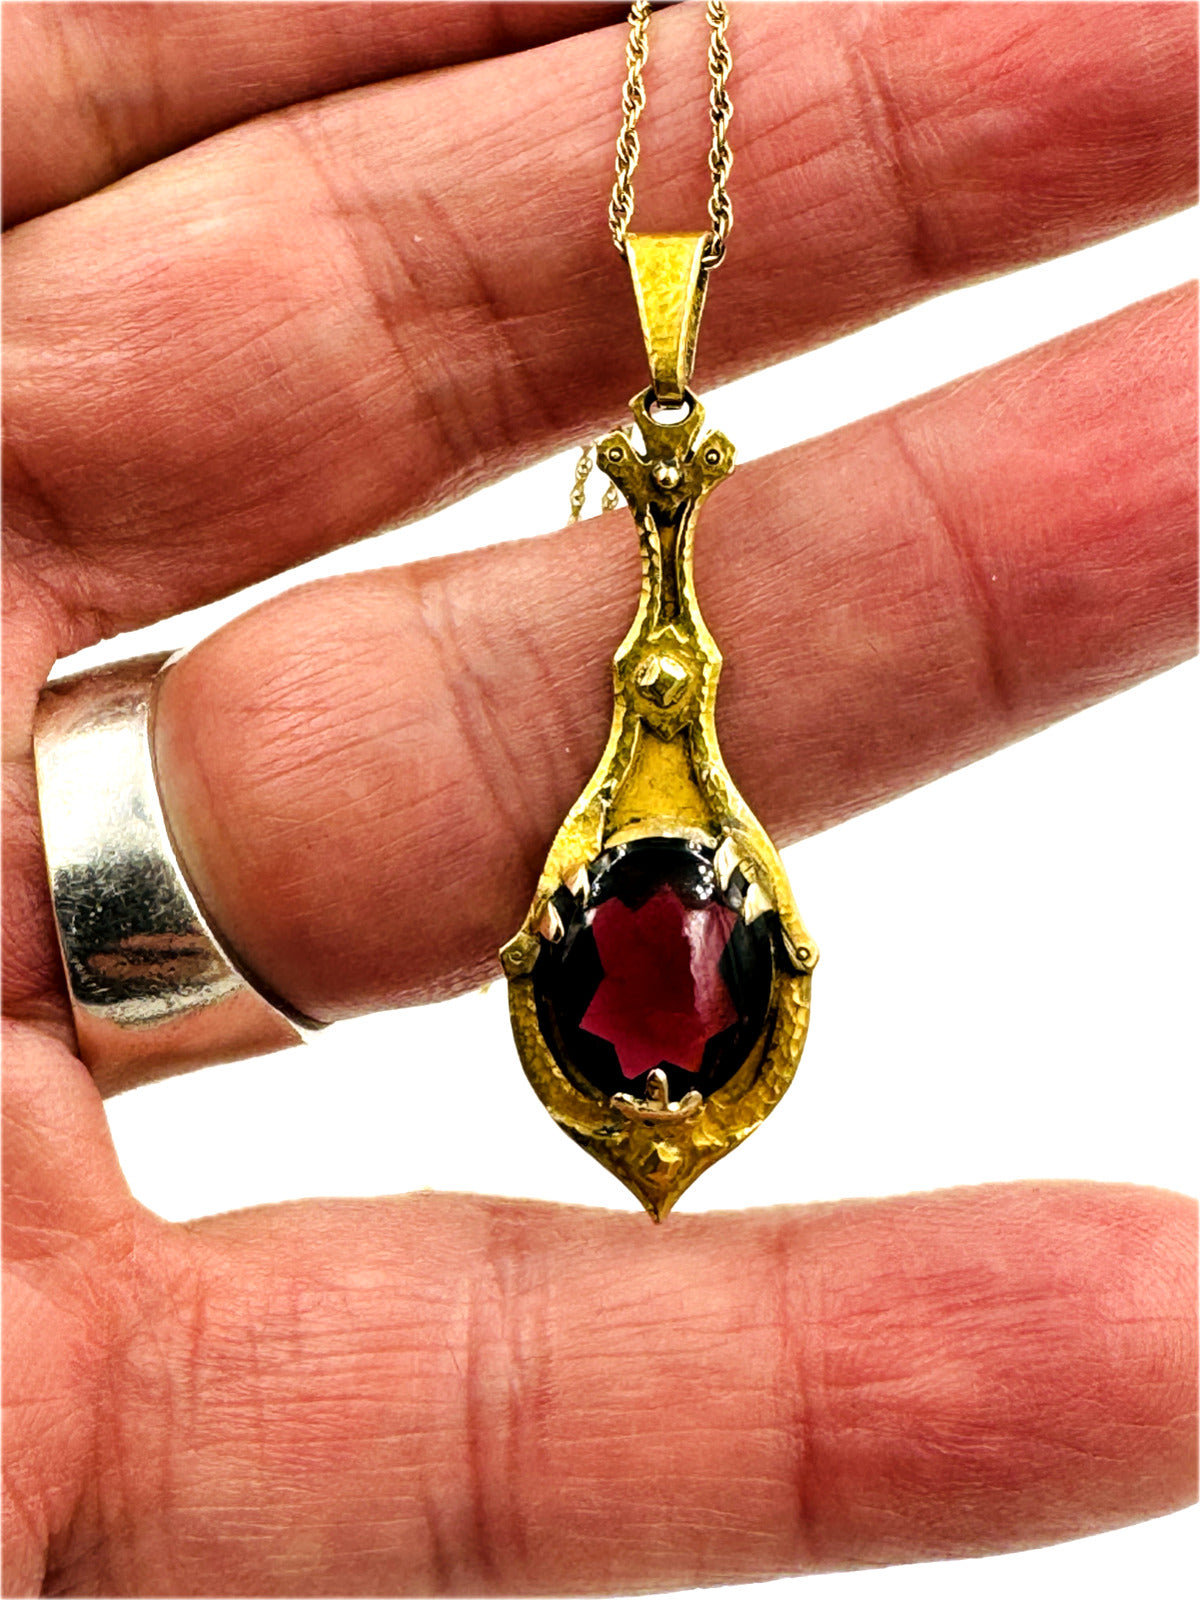 Victorian R.W. Edwards 14k yellow Gold Garnet Pendant Necklace